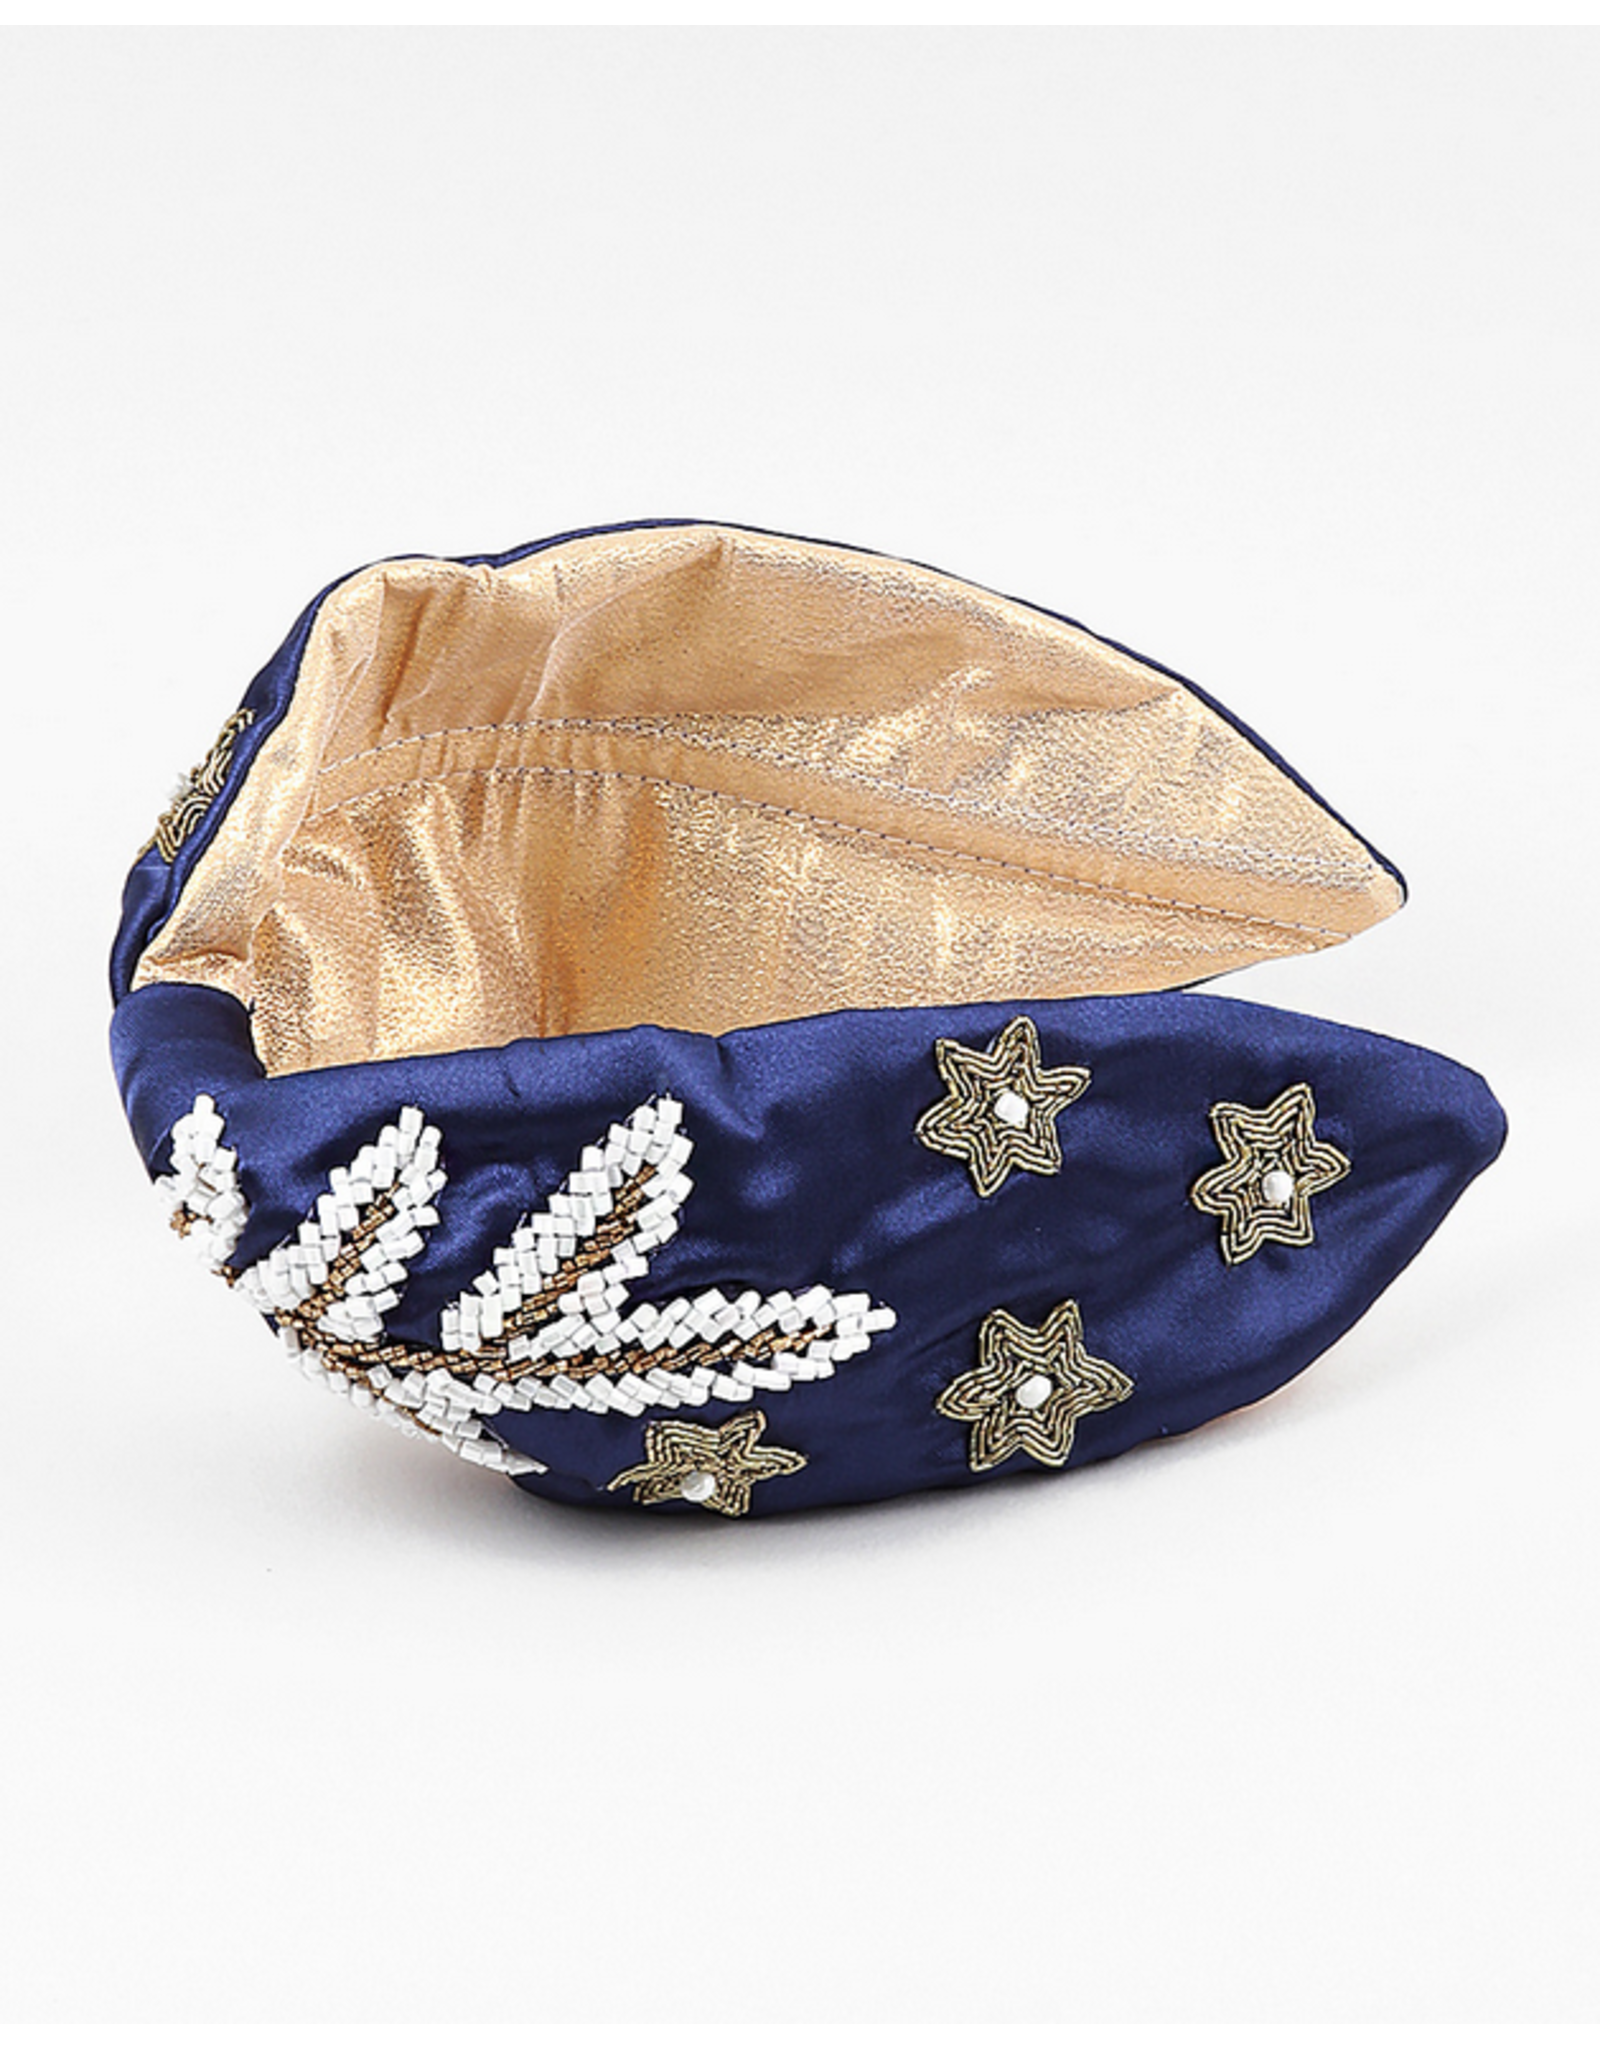 Blue Suede Jewels Navy Beaded Headband